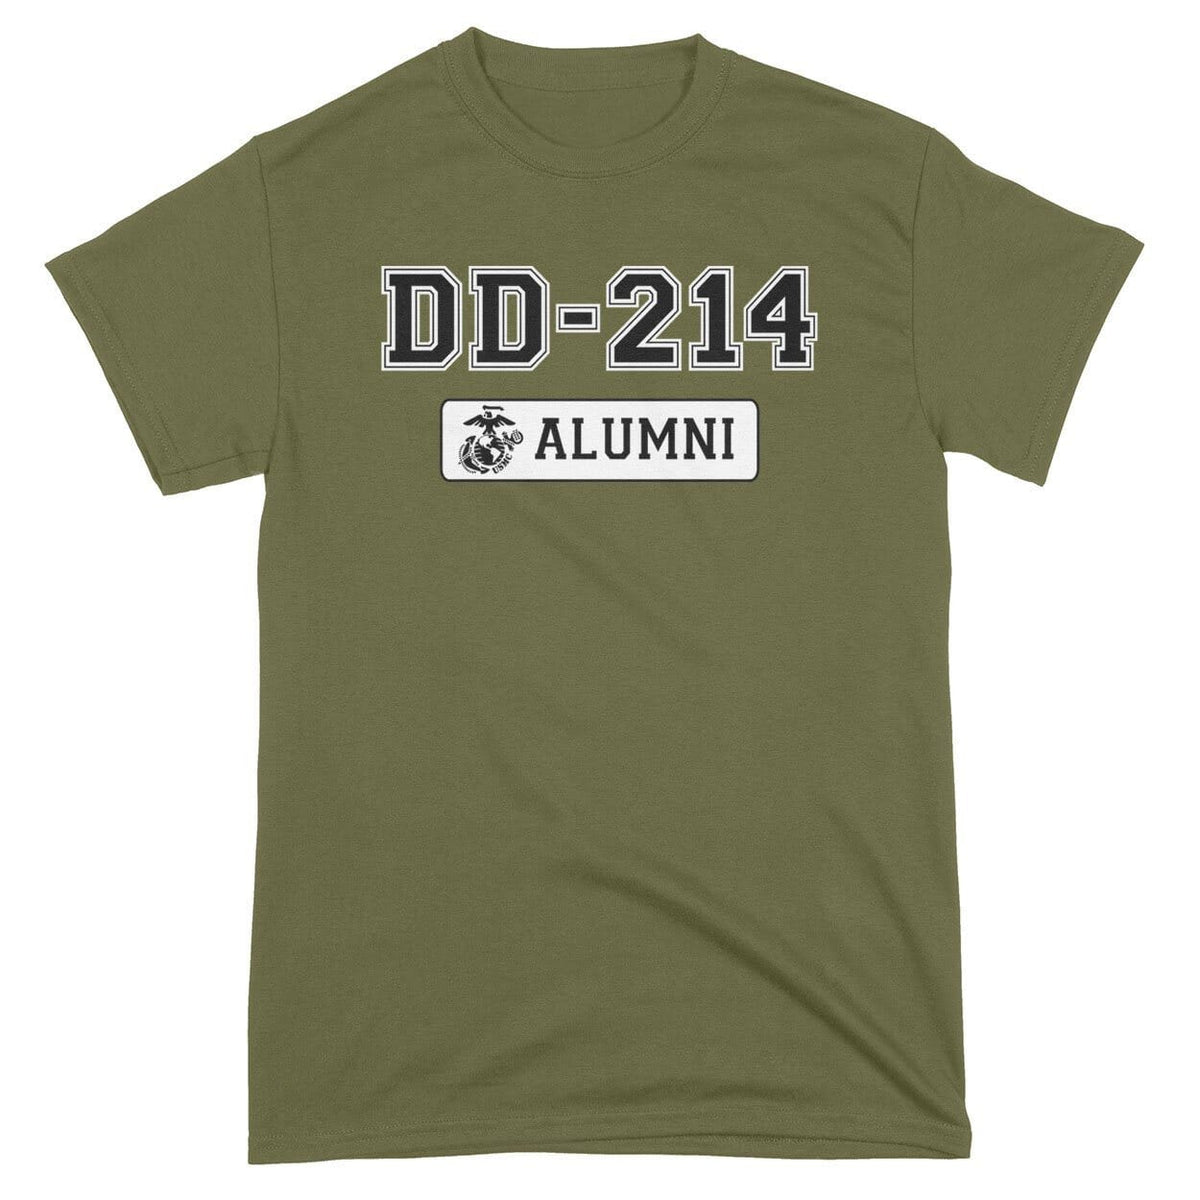 DD-214 Alumni T-Shirt - Marine Corps Direct